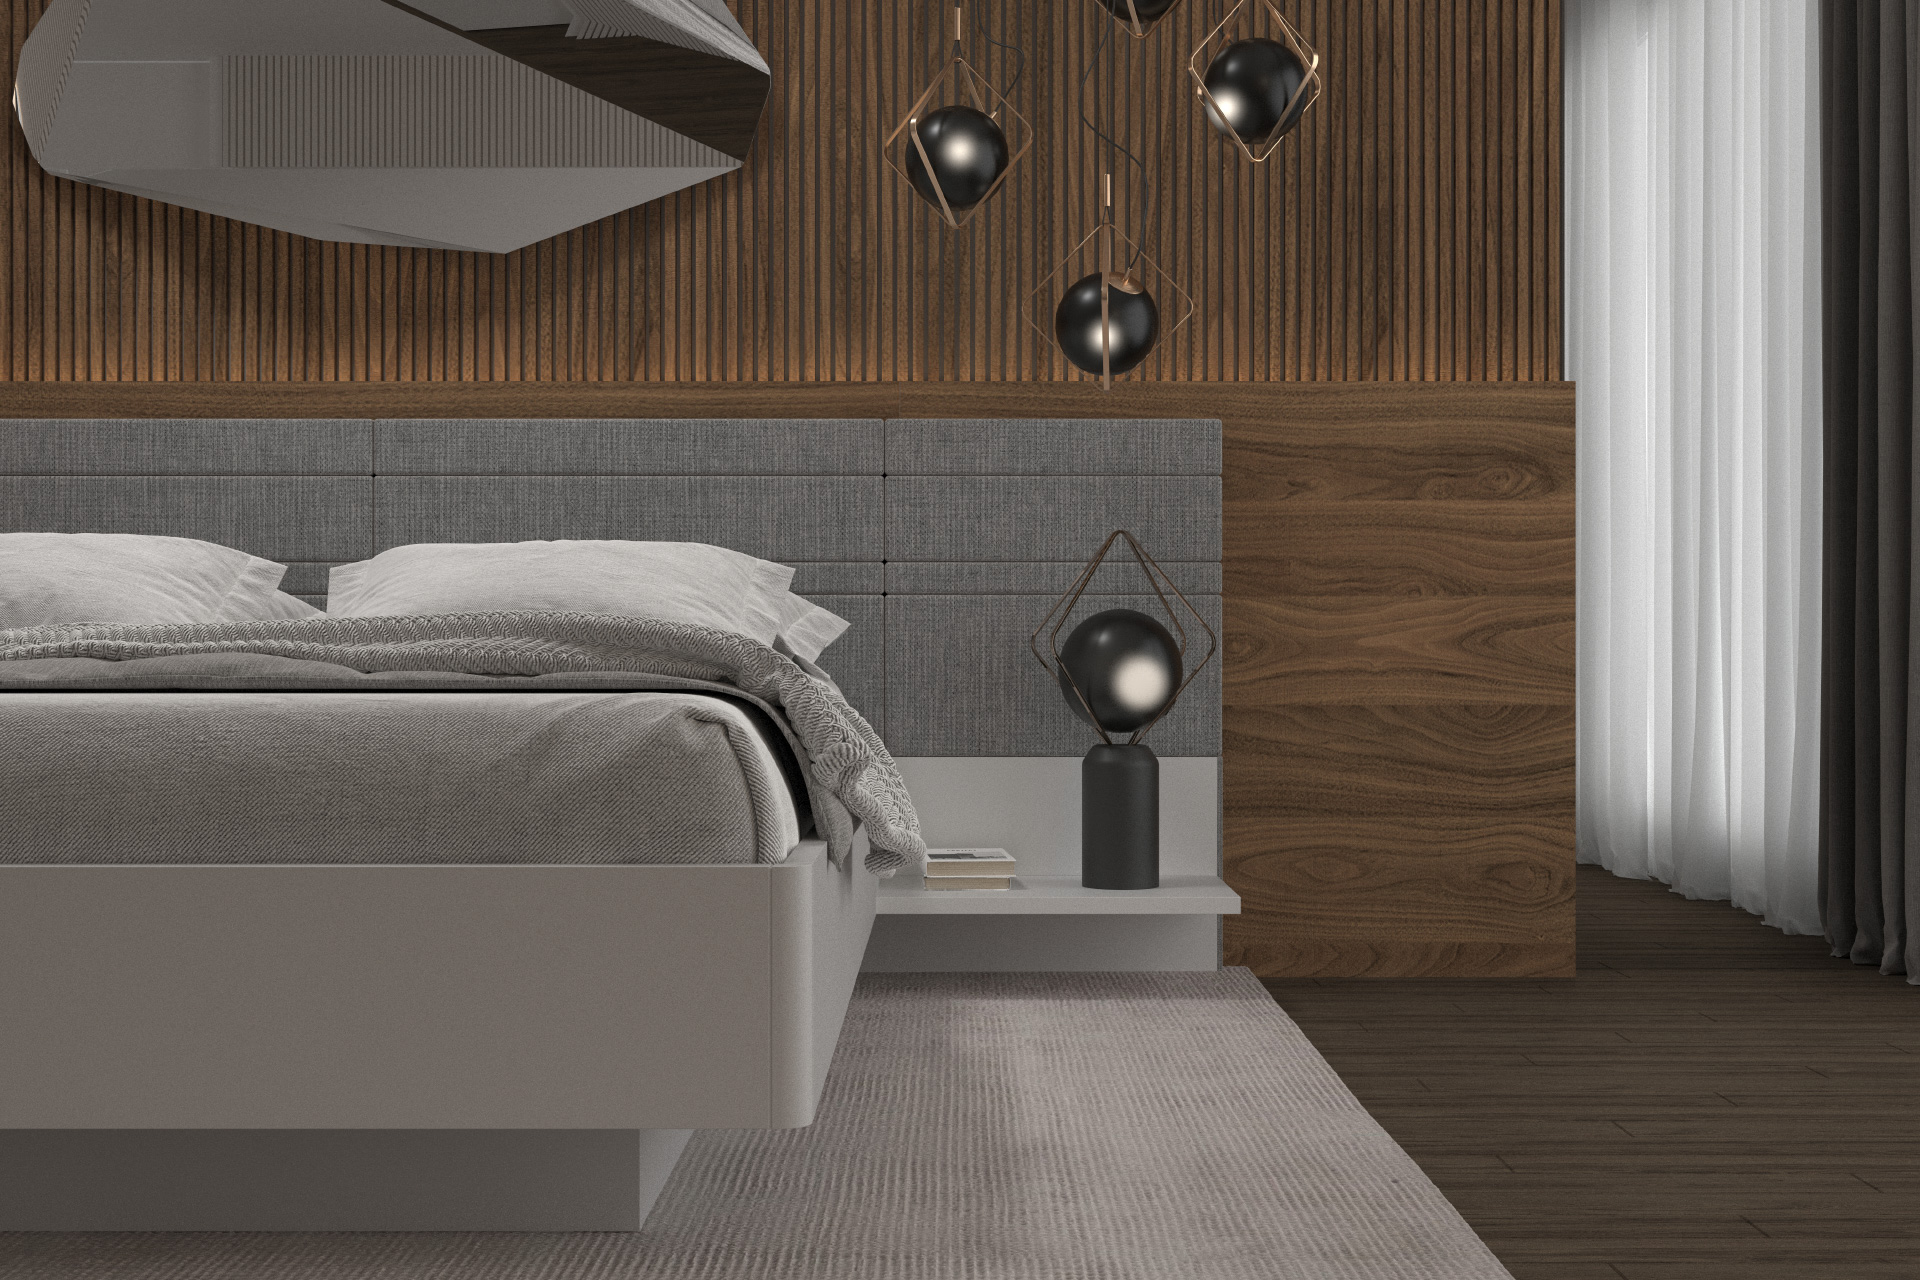 Hanák CHARLOTTE bedroom Luxurious and premium look